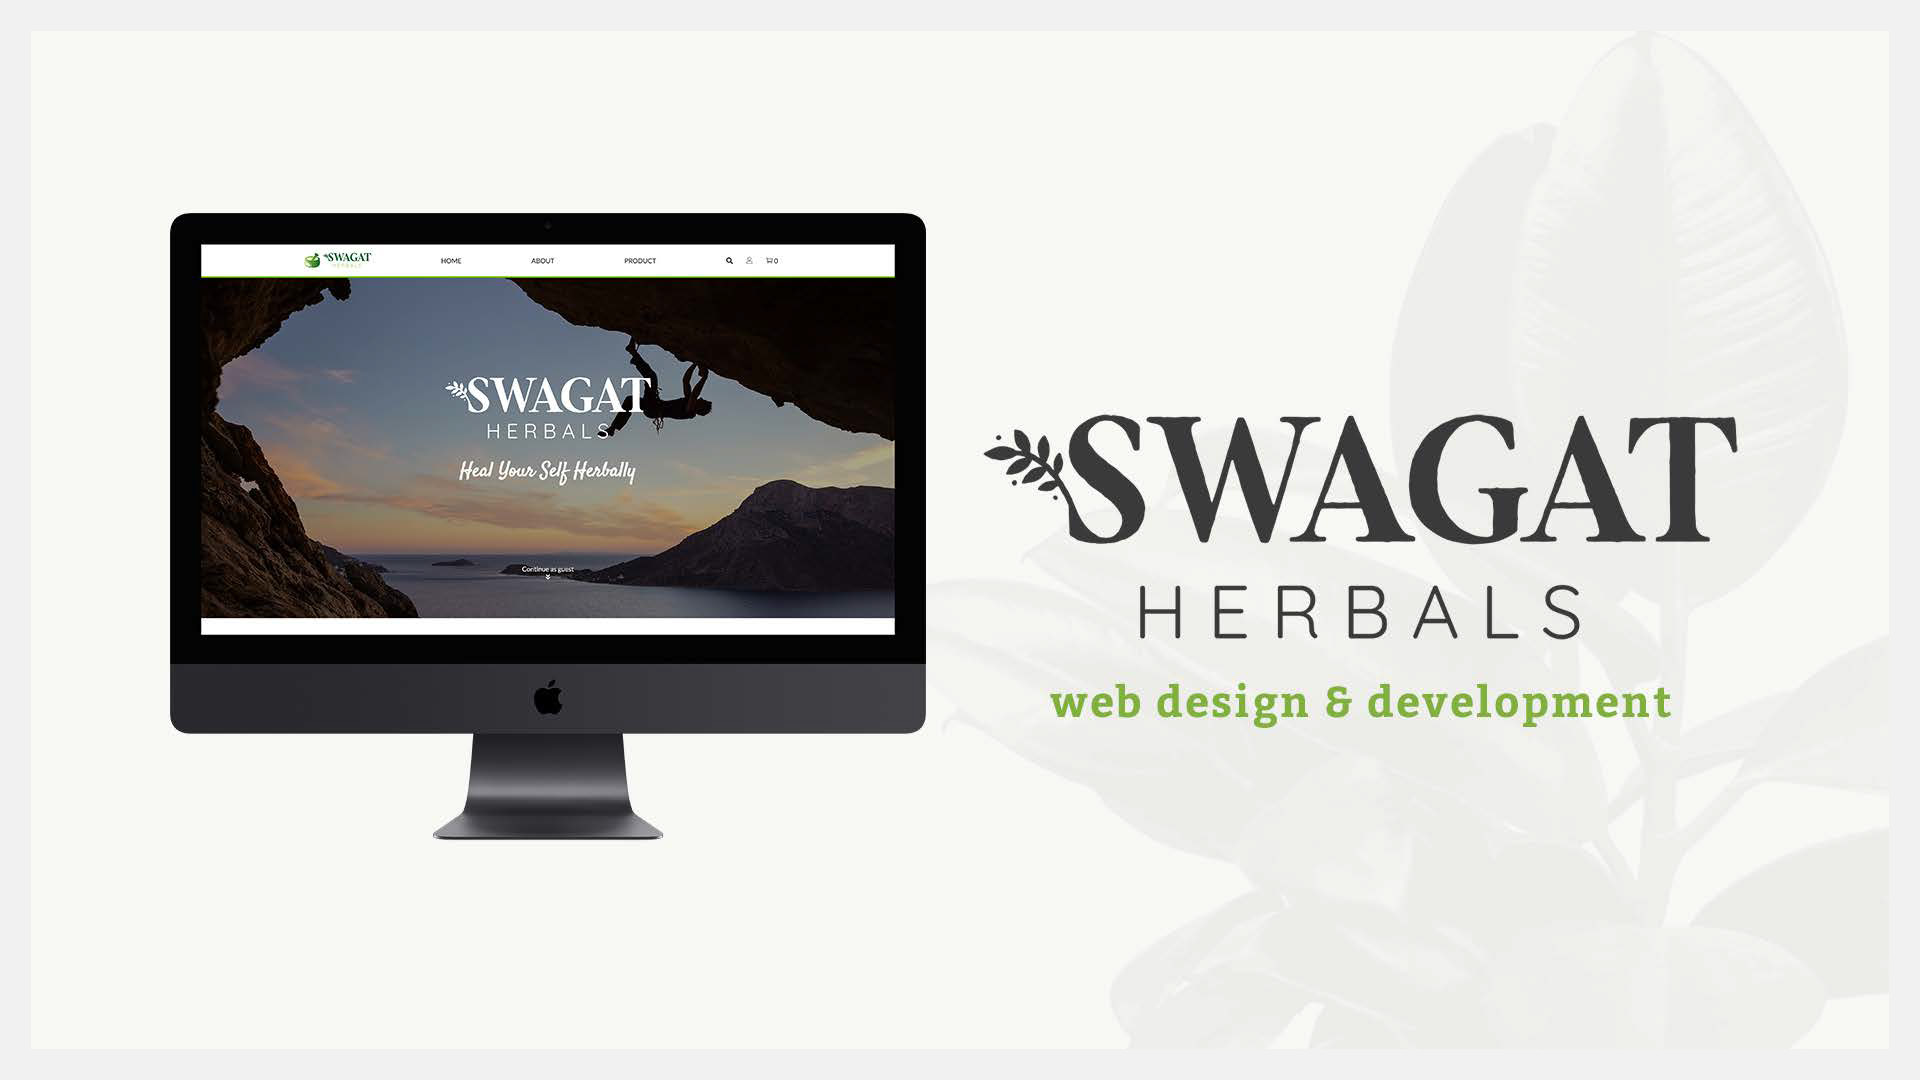 Swagat Herbals - A web development Case Study